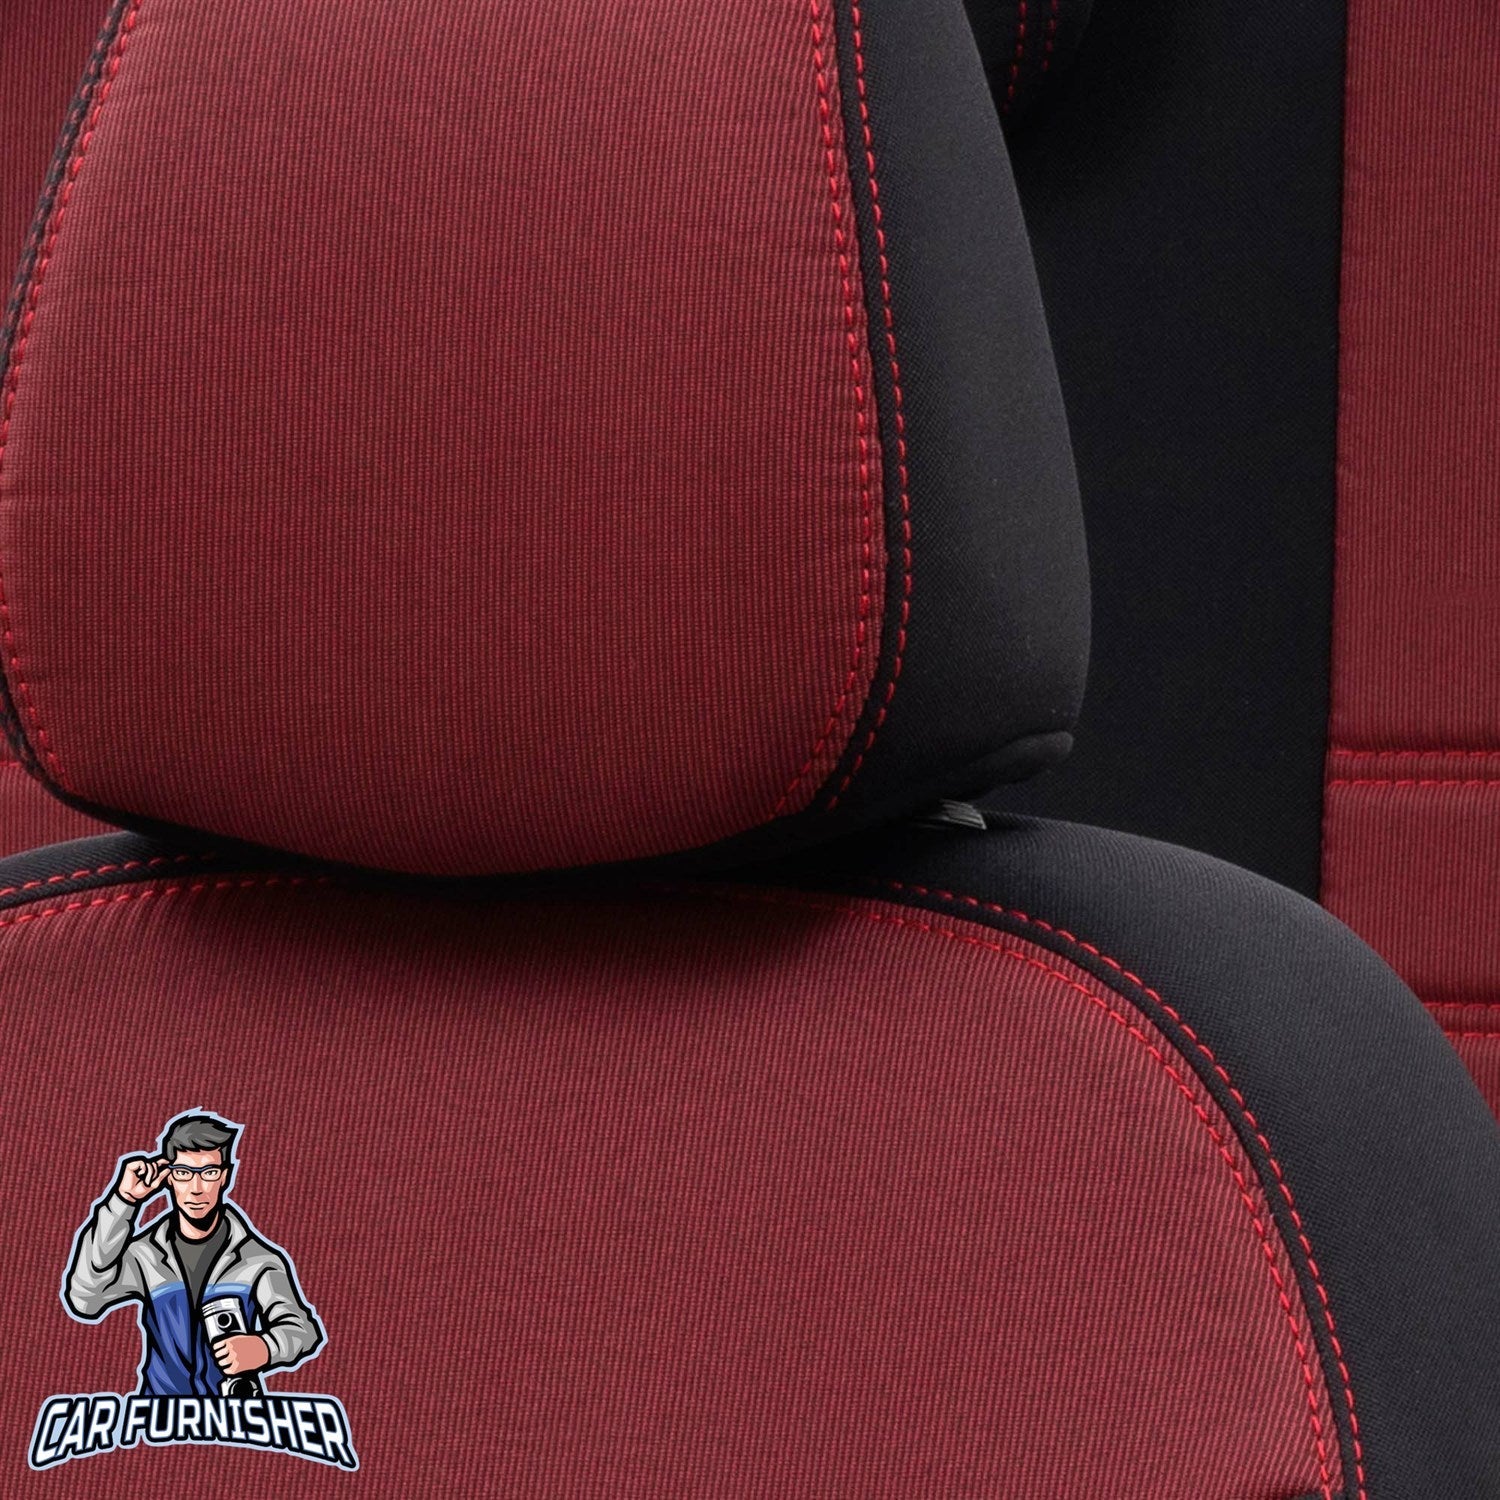 Volkswagen Golf Seat Cover Original Jacquard Design Red Jacquard Fabric